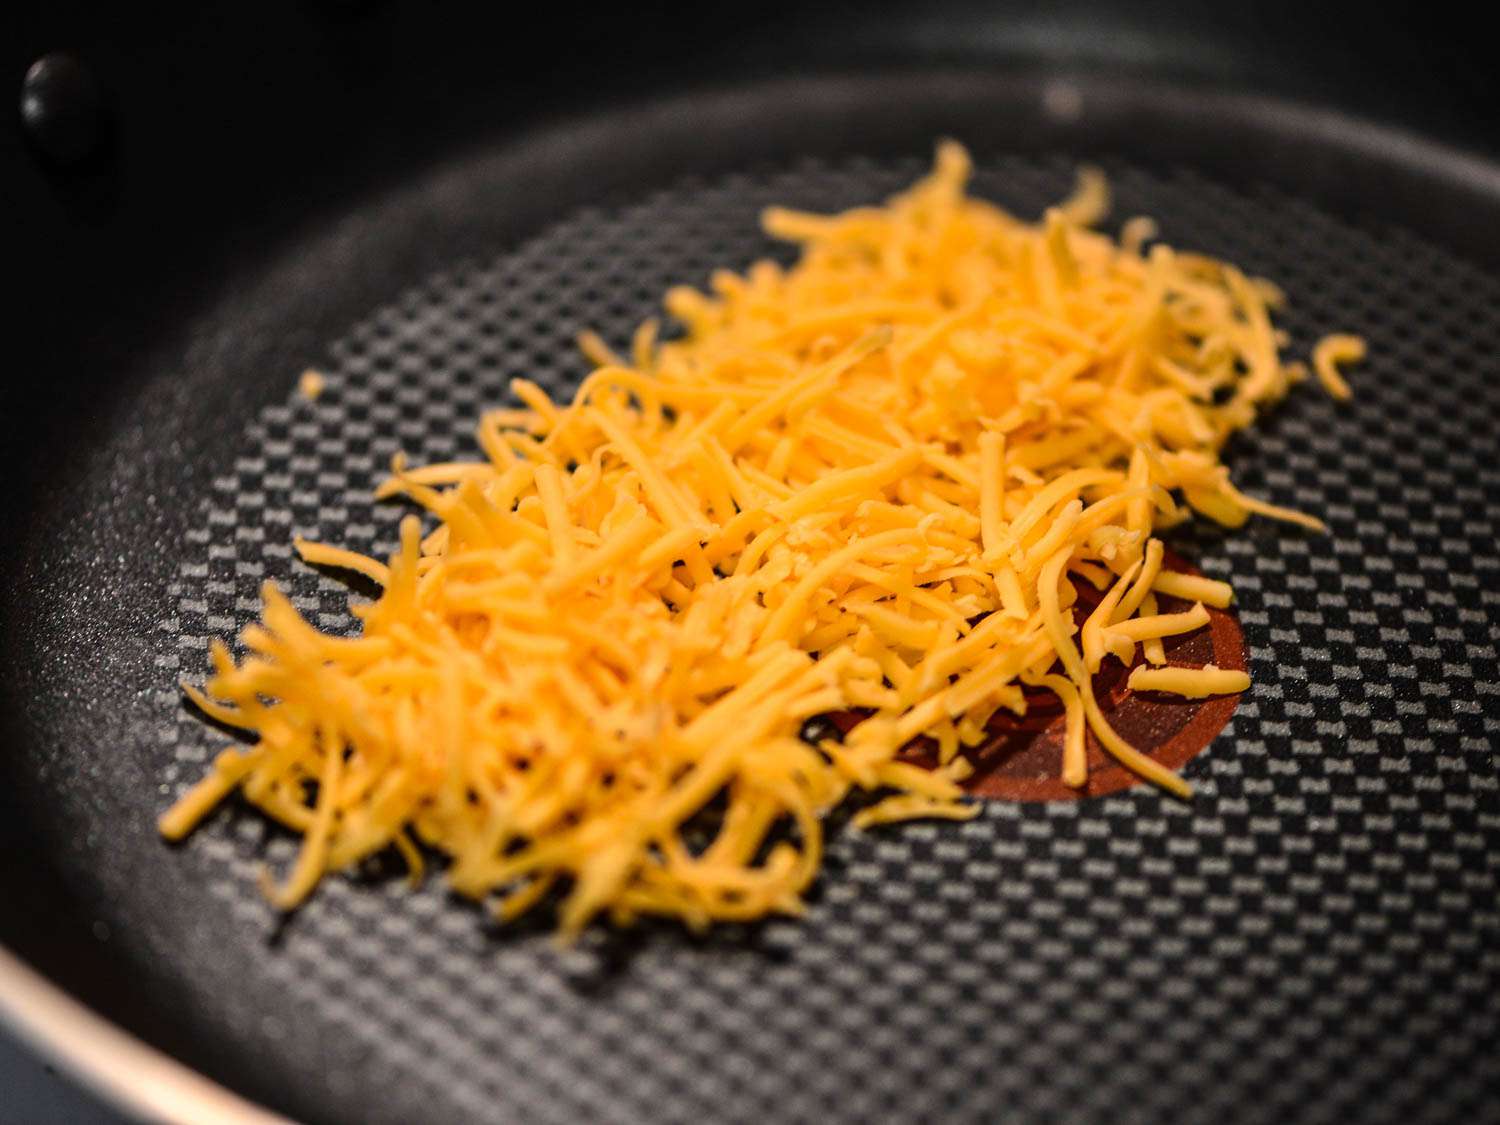 20150422-crispy-cheese-tacos-step-1-joshua-bousel.jpg